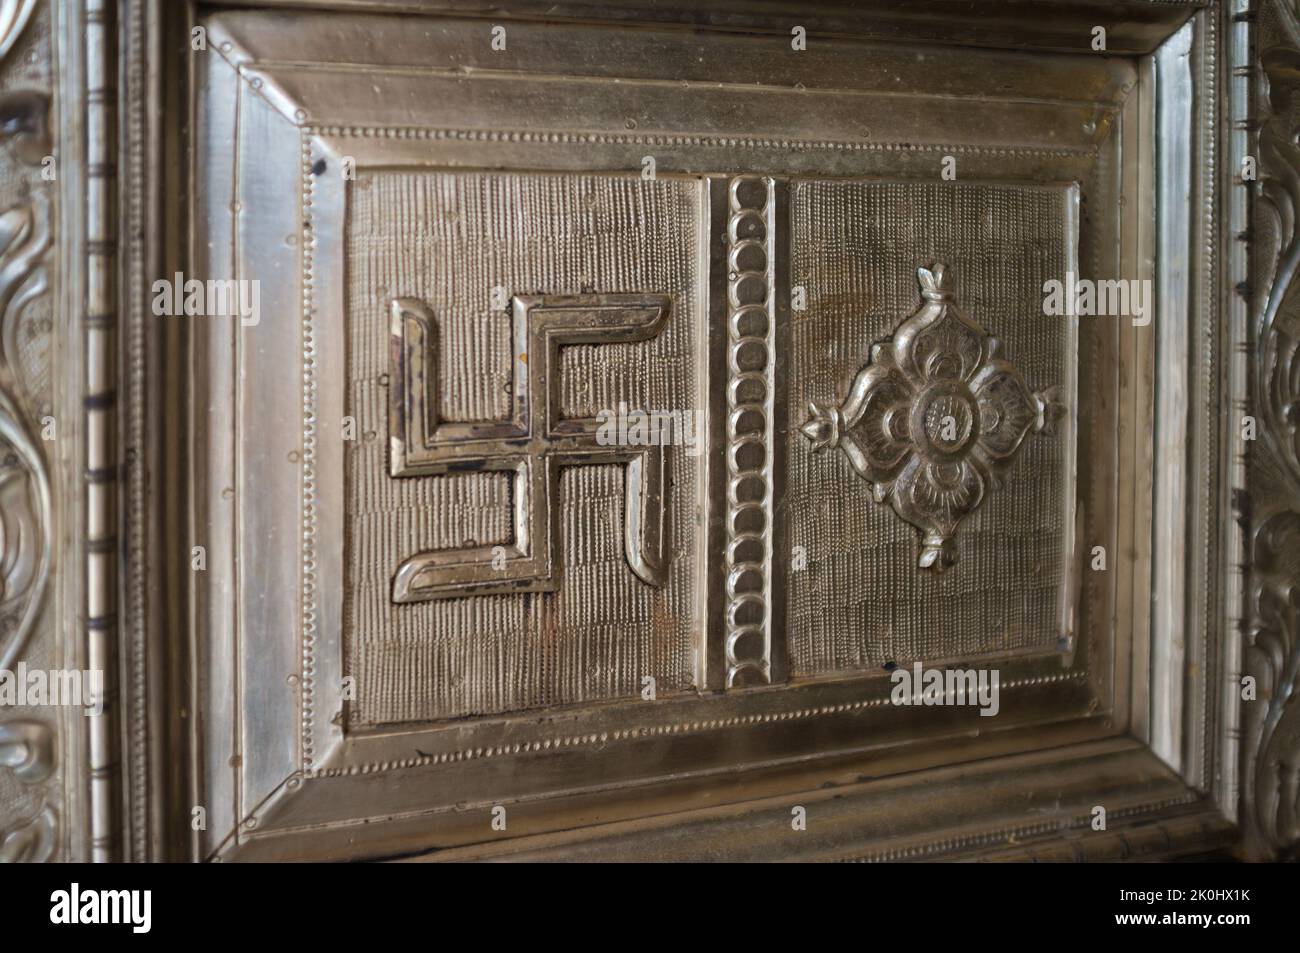 The Door with a swastika in Jain temple in Mumbai Stock Photo